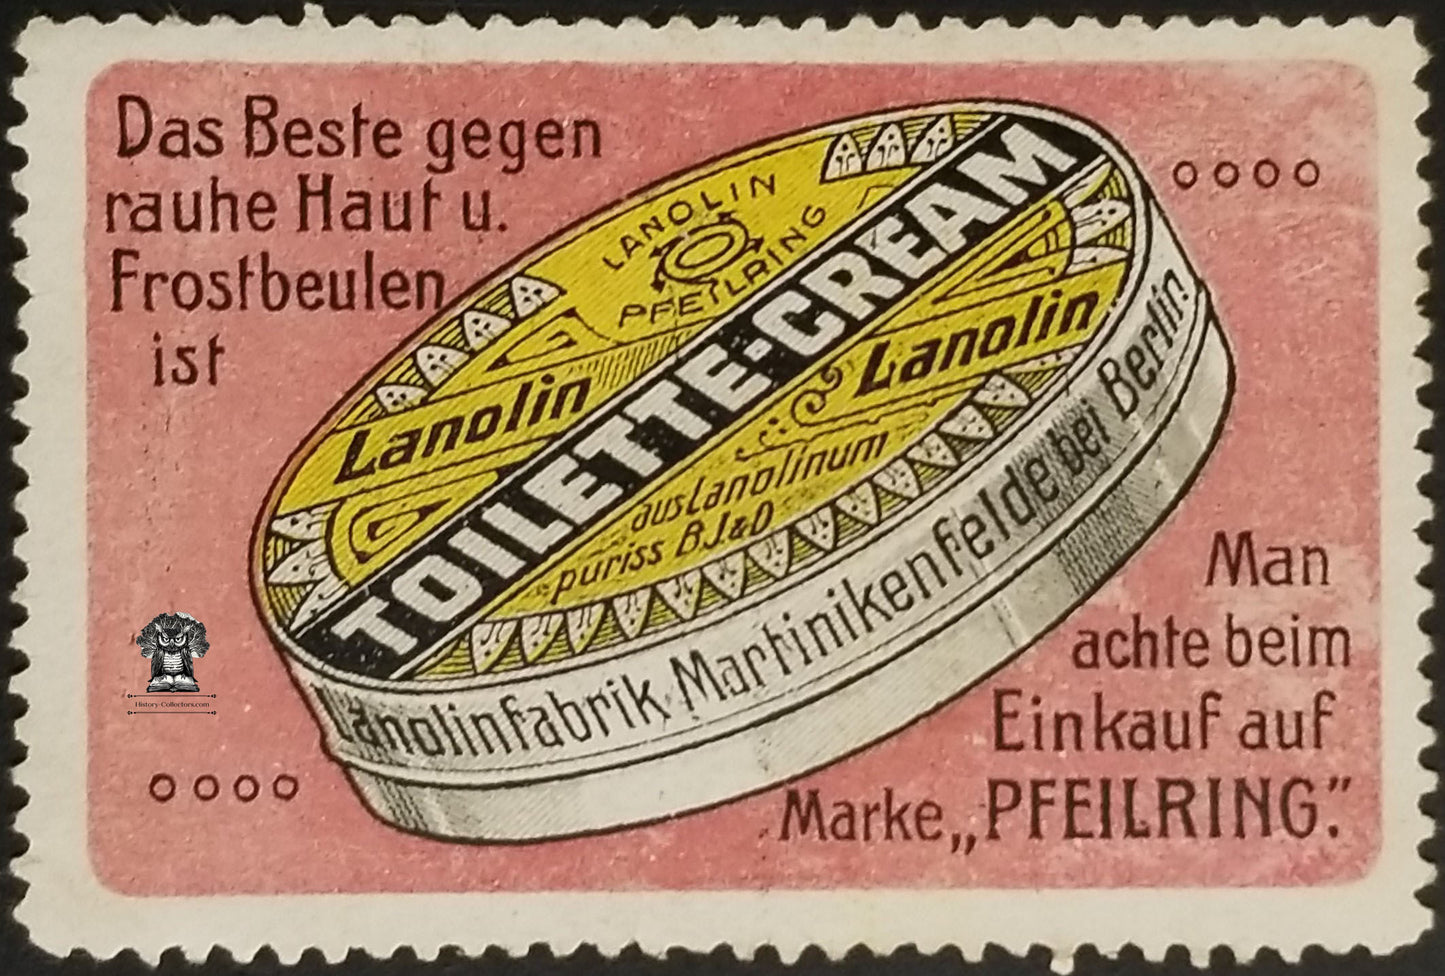 1920's Pfeilring Lanolin Toilette Cream Cinderella Advertising Poster Stamp - Berlin Germany